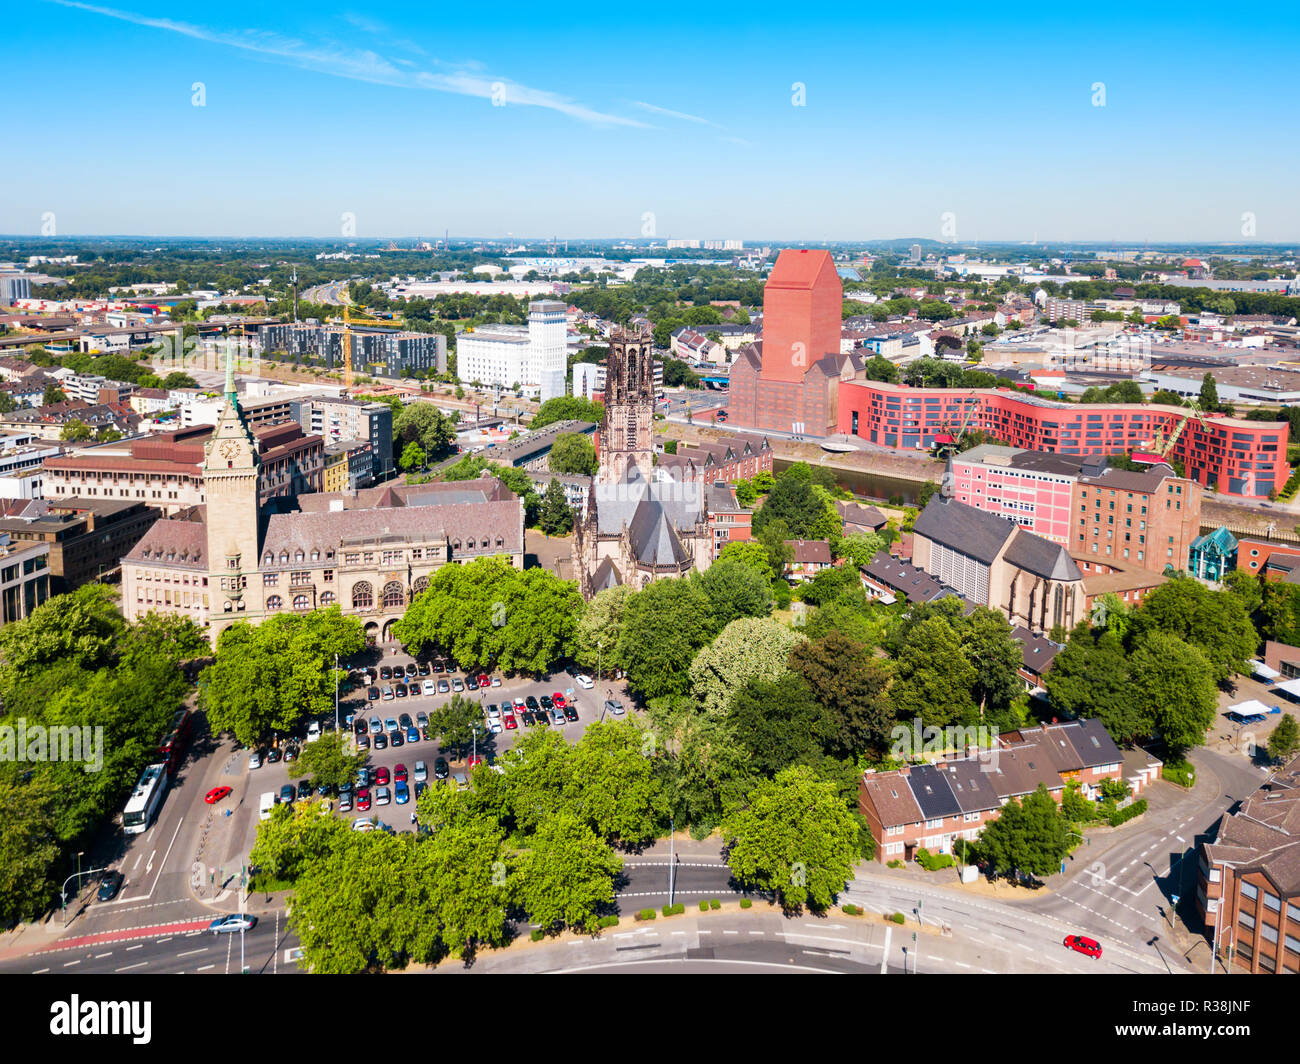 https://c8.alamy.com/comp/R38JNF/duisburg-city-aerial-panoramic-view-in-germany-R38JNF.jpg